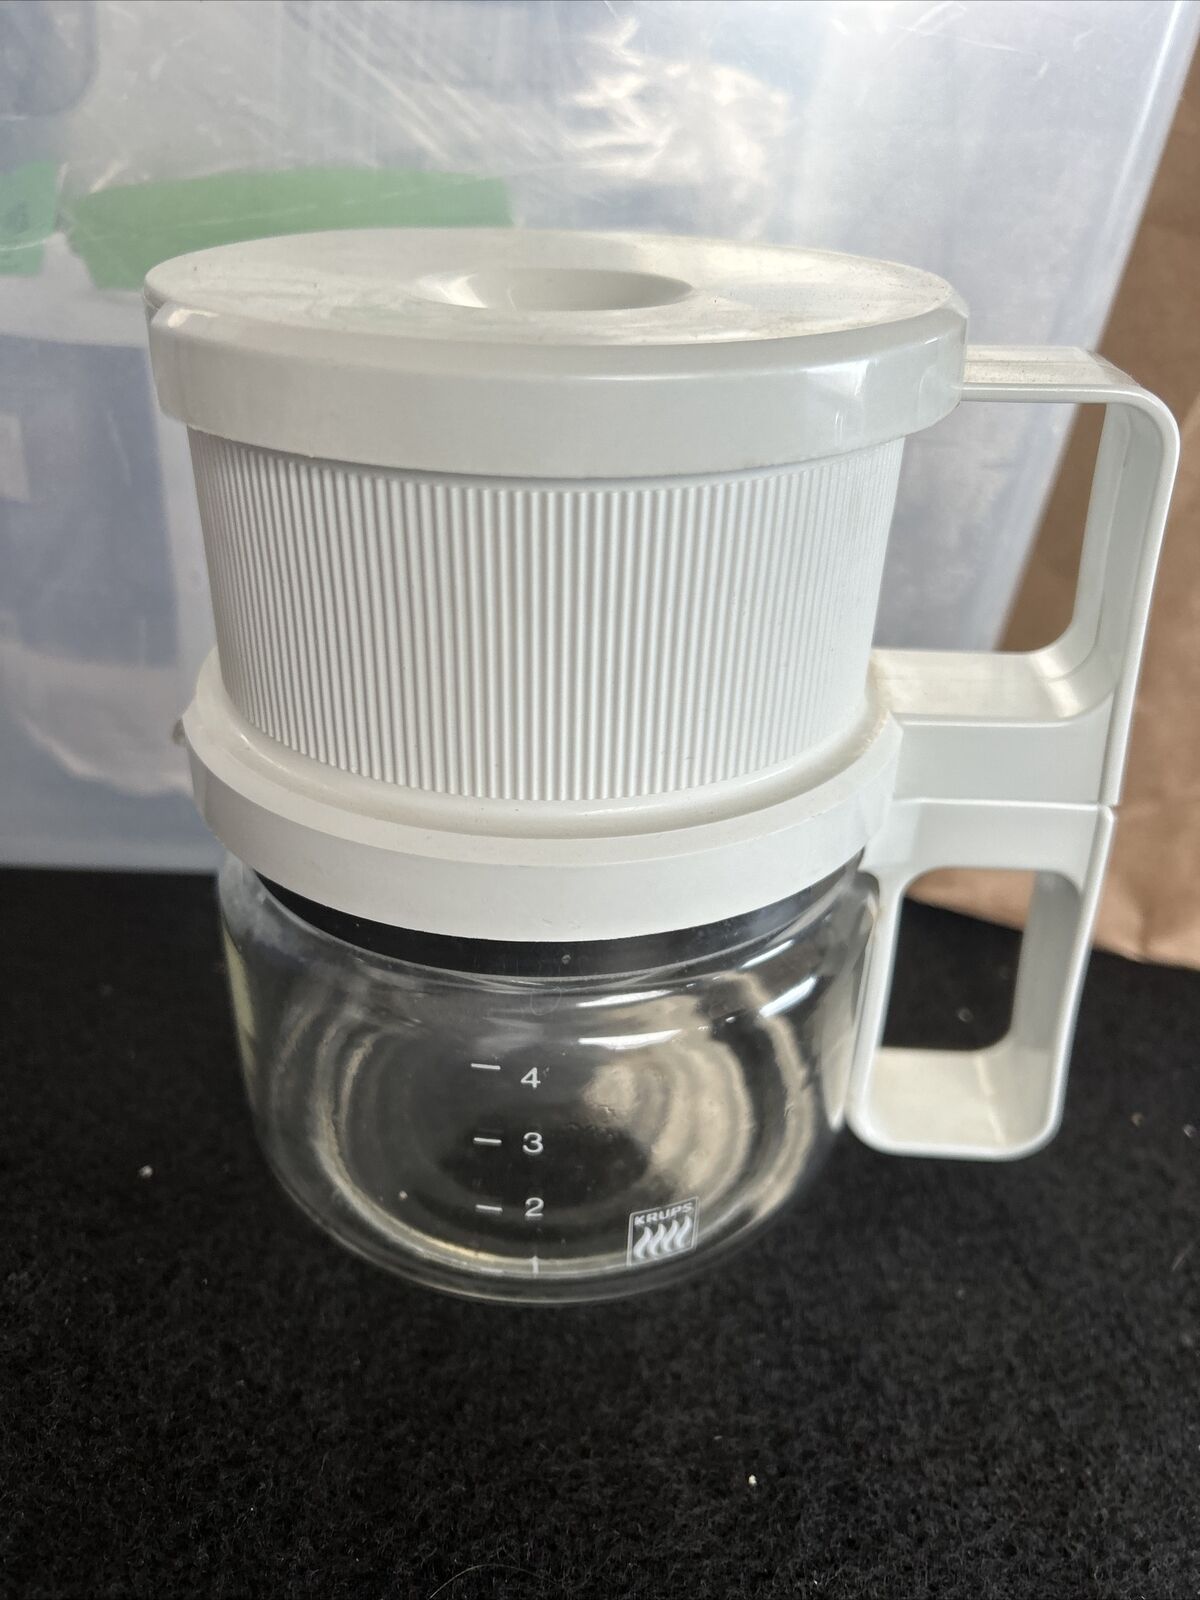 Krups Brewmaster Jr Coffee Maker Type 170 4-cup Carafe W/ Filter Brew Basket Lid